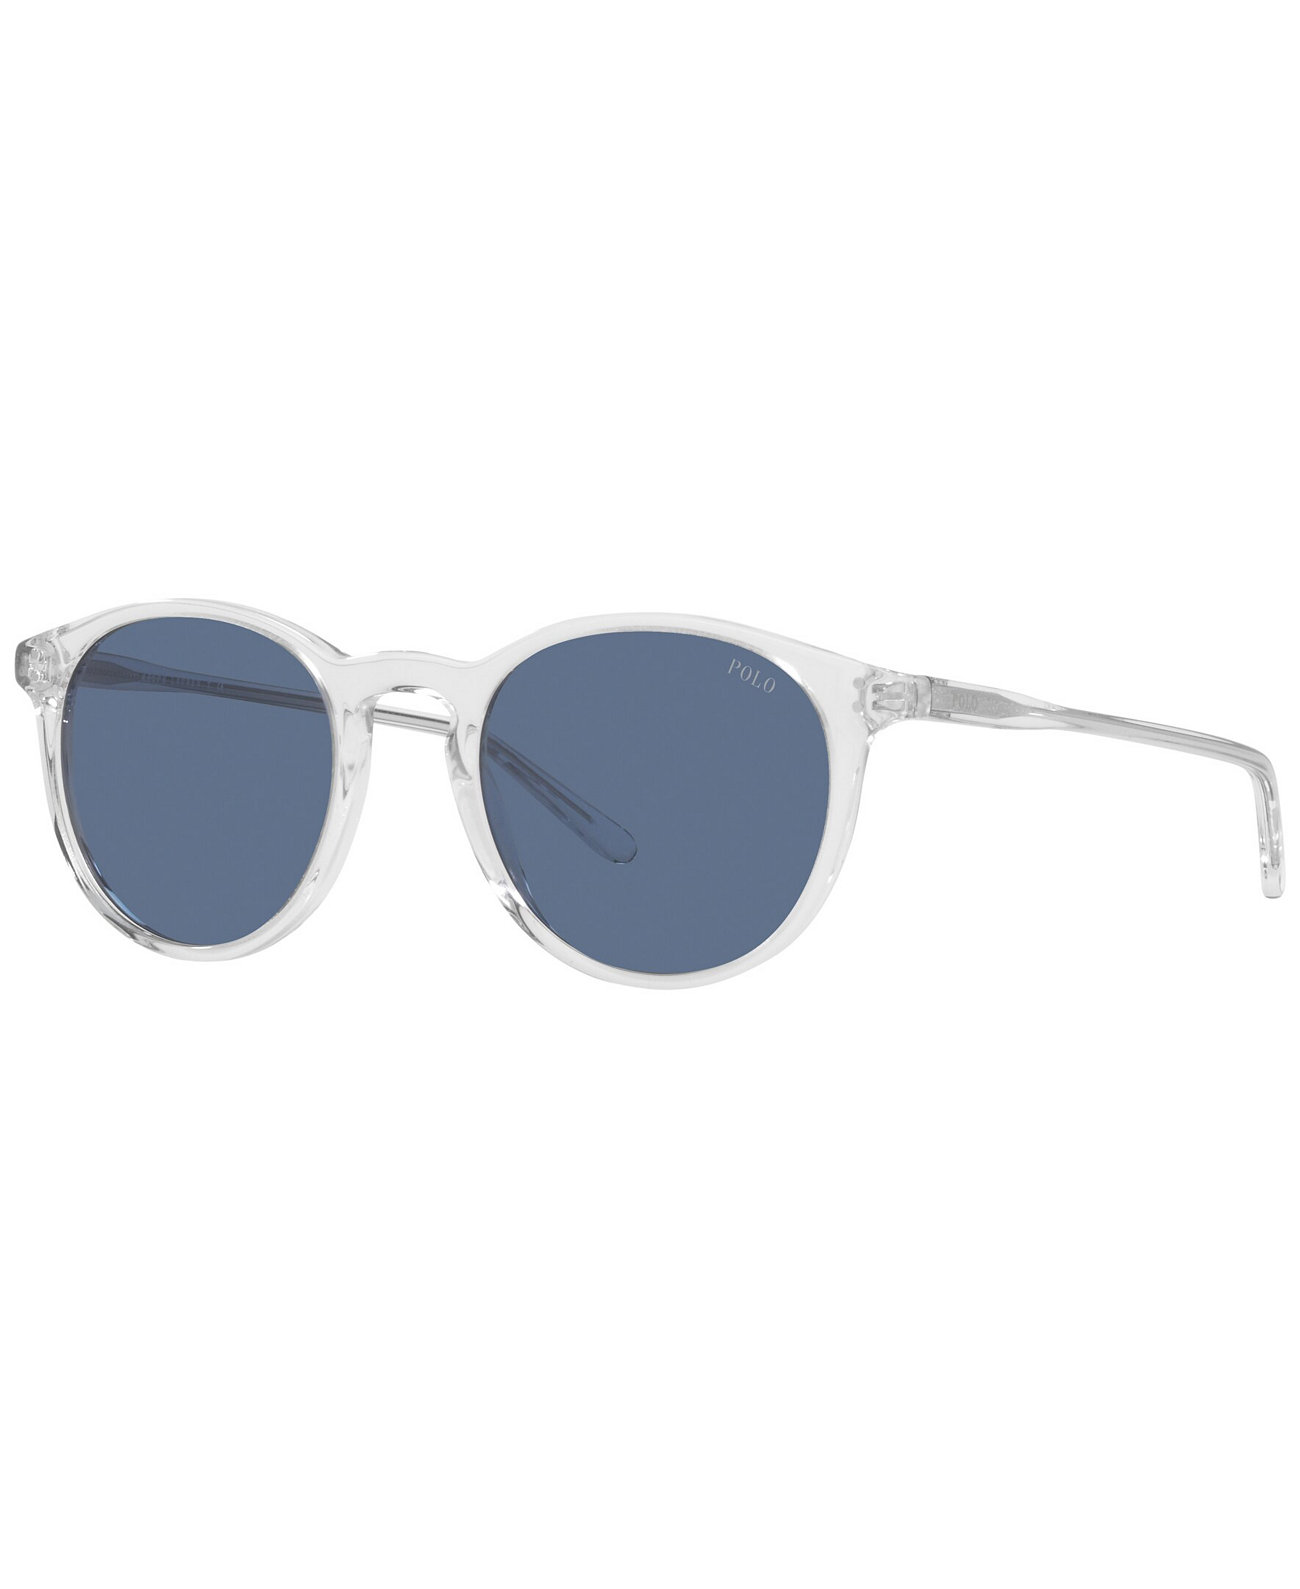 Men's Sunglasses, PH4110 Polo Ralph Lauren